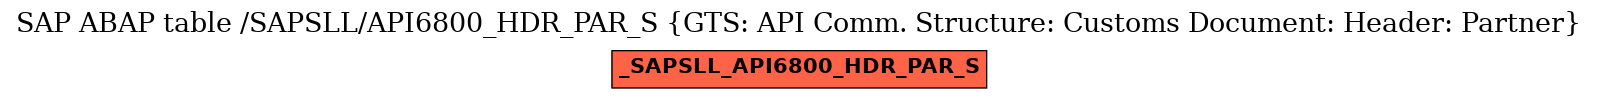 E-R Diagram for table /SAPSLL/API6800_HDR_PAR_S (GTS: API Comm. Structure: Customs Document: Header: Partner)